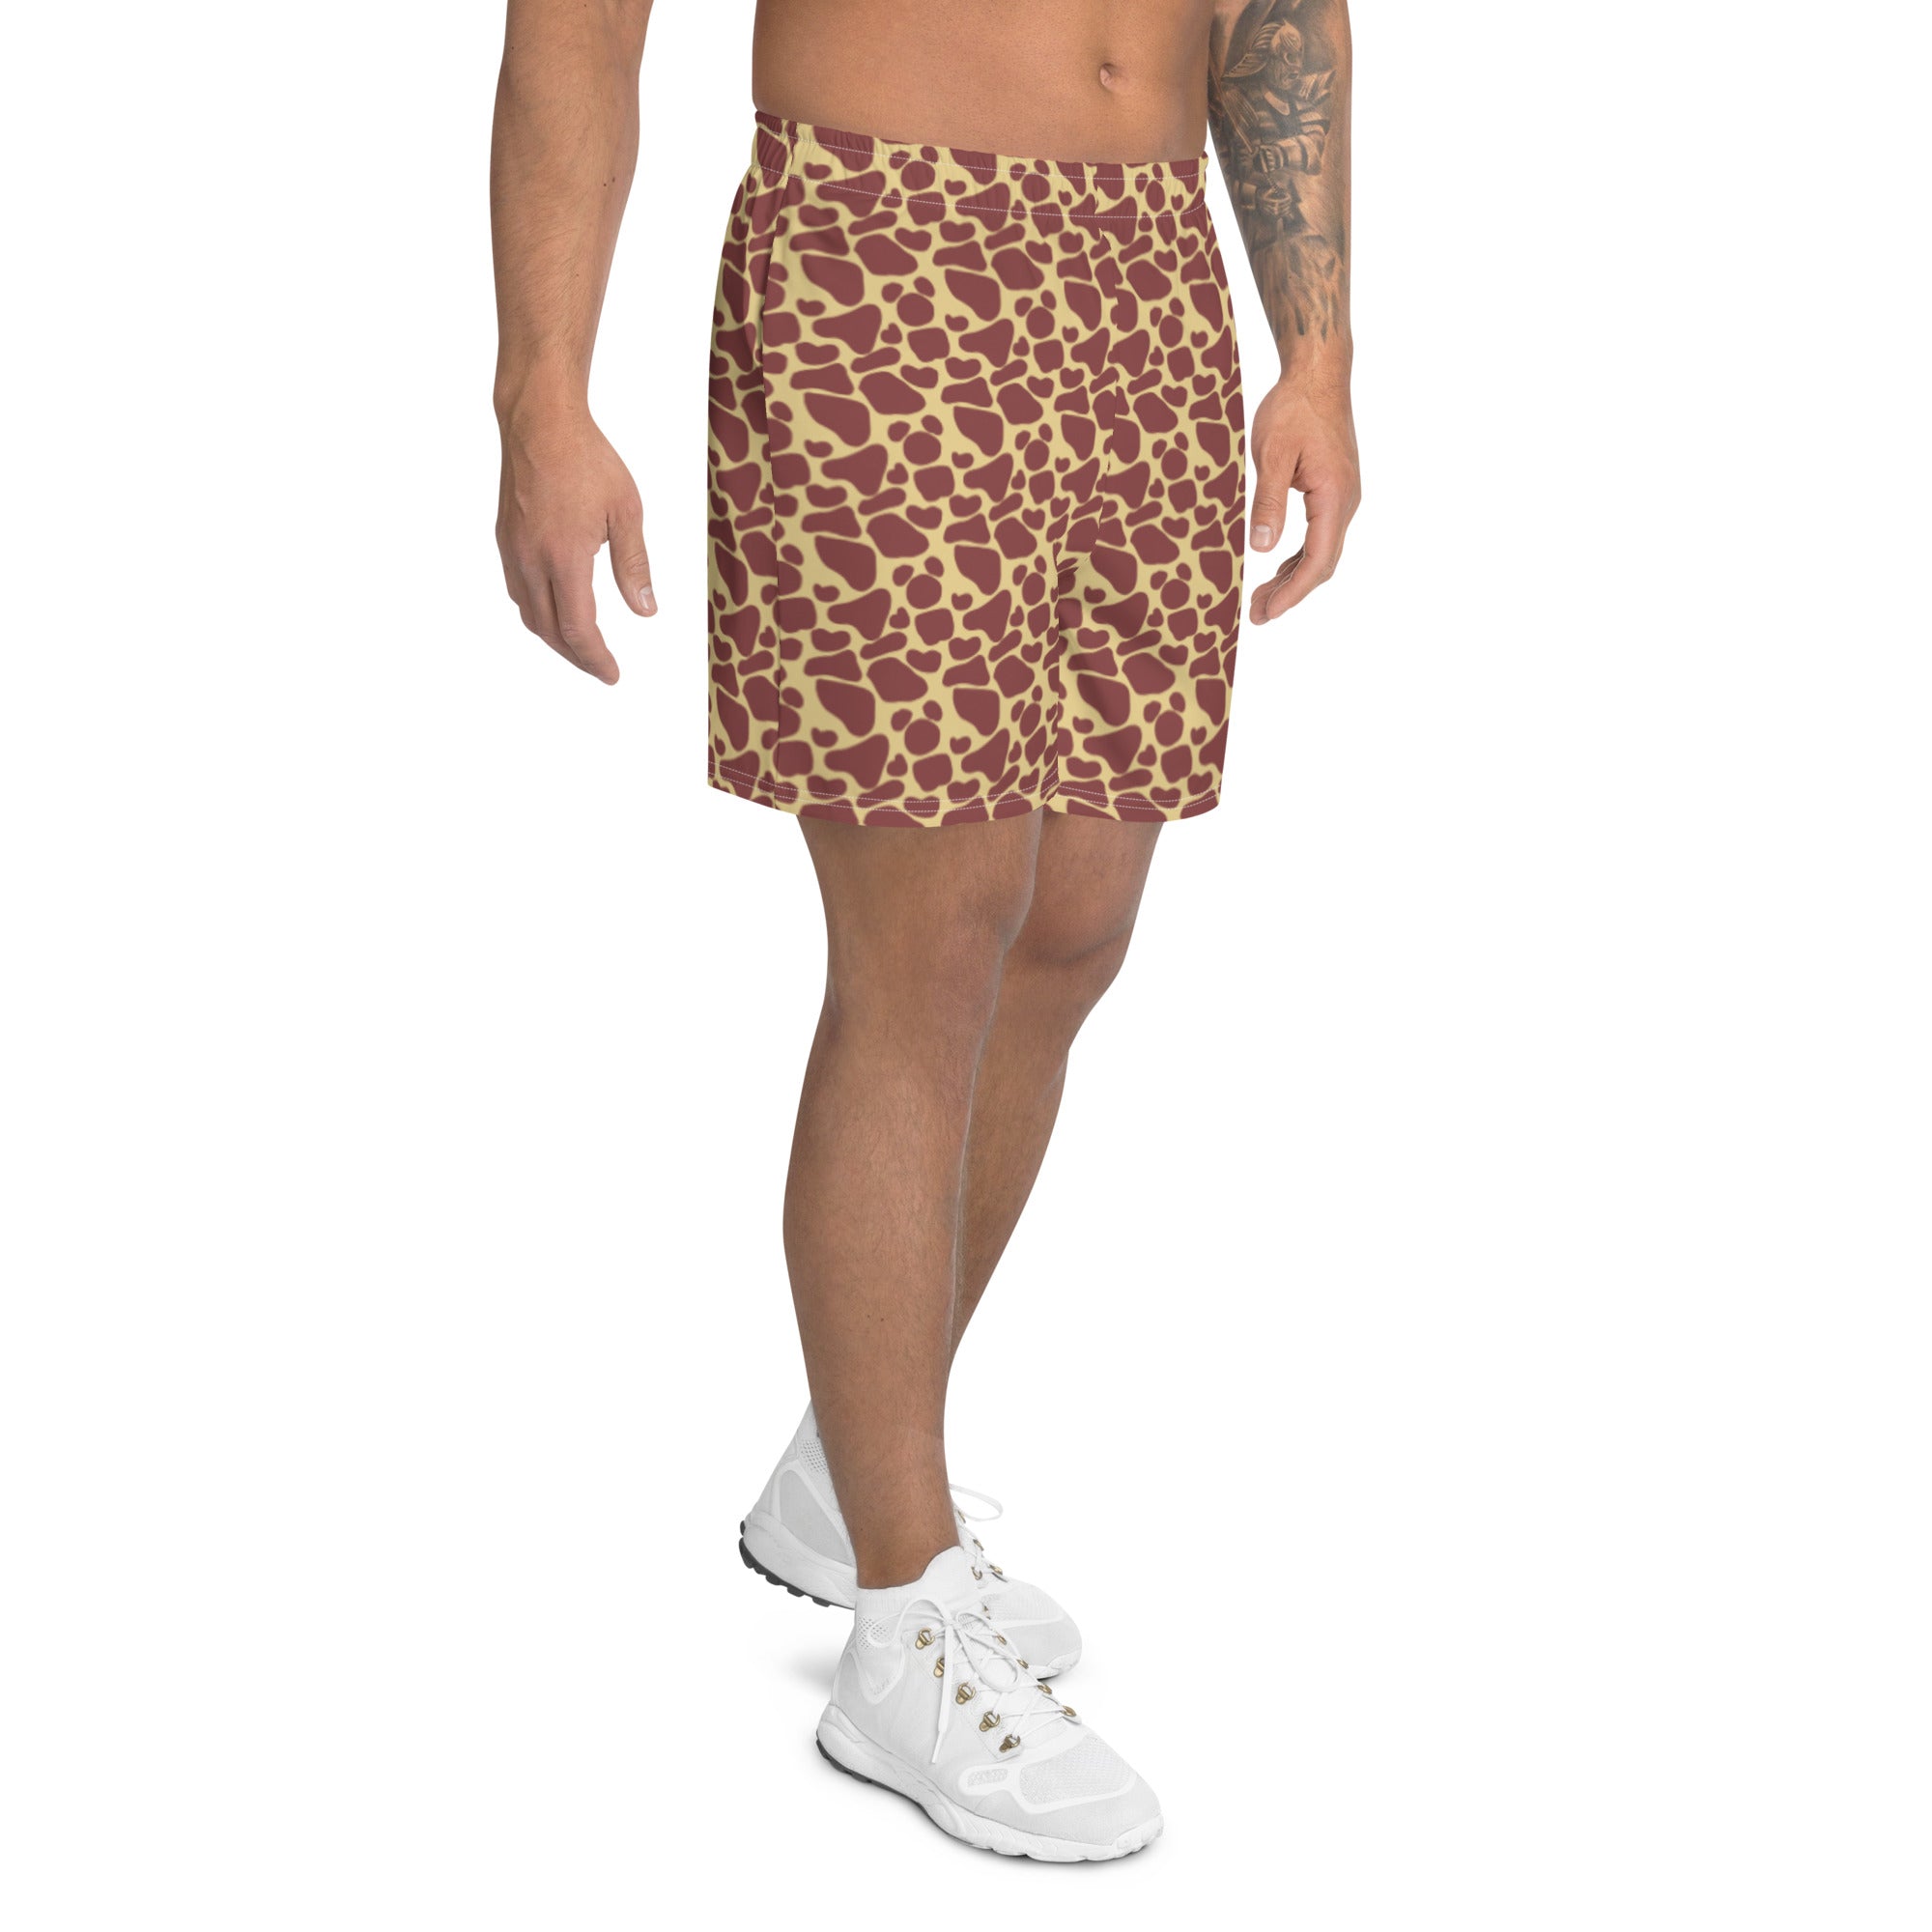 Giraffe Men's Recycled Athletic Shorts